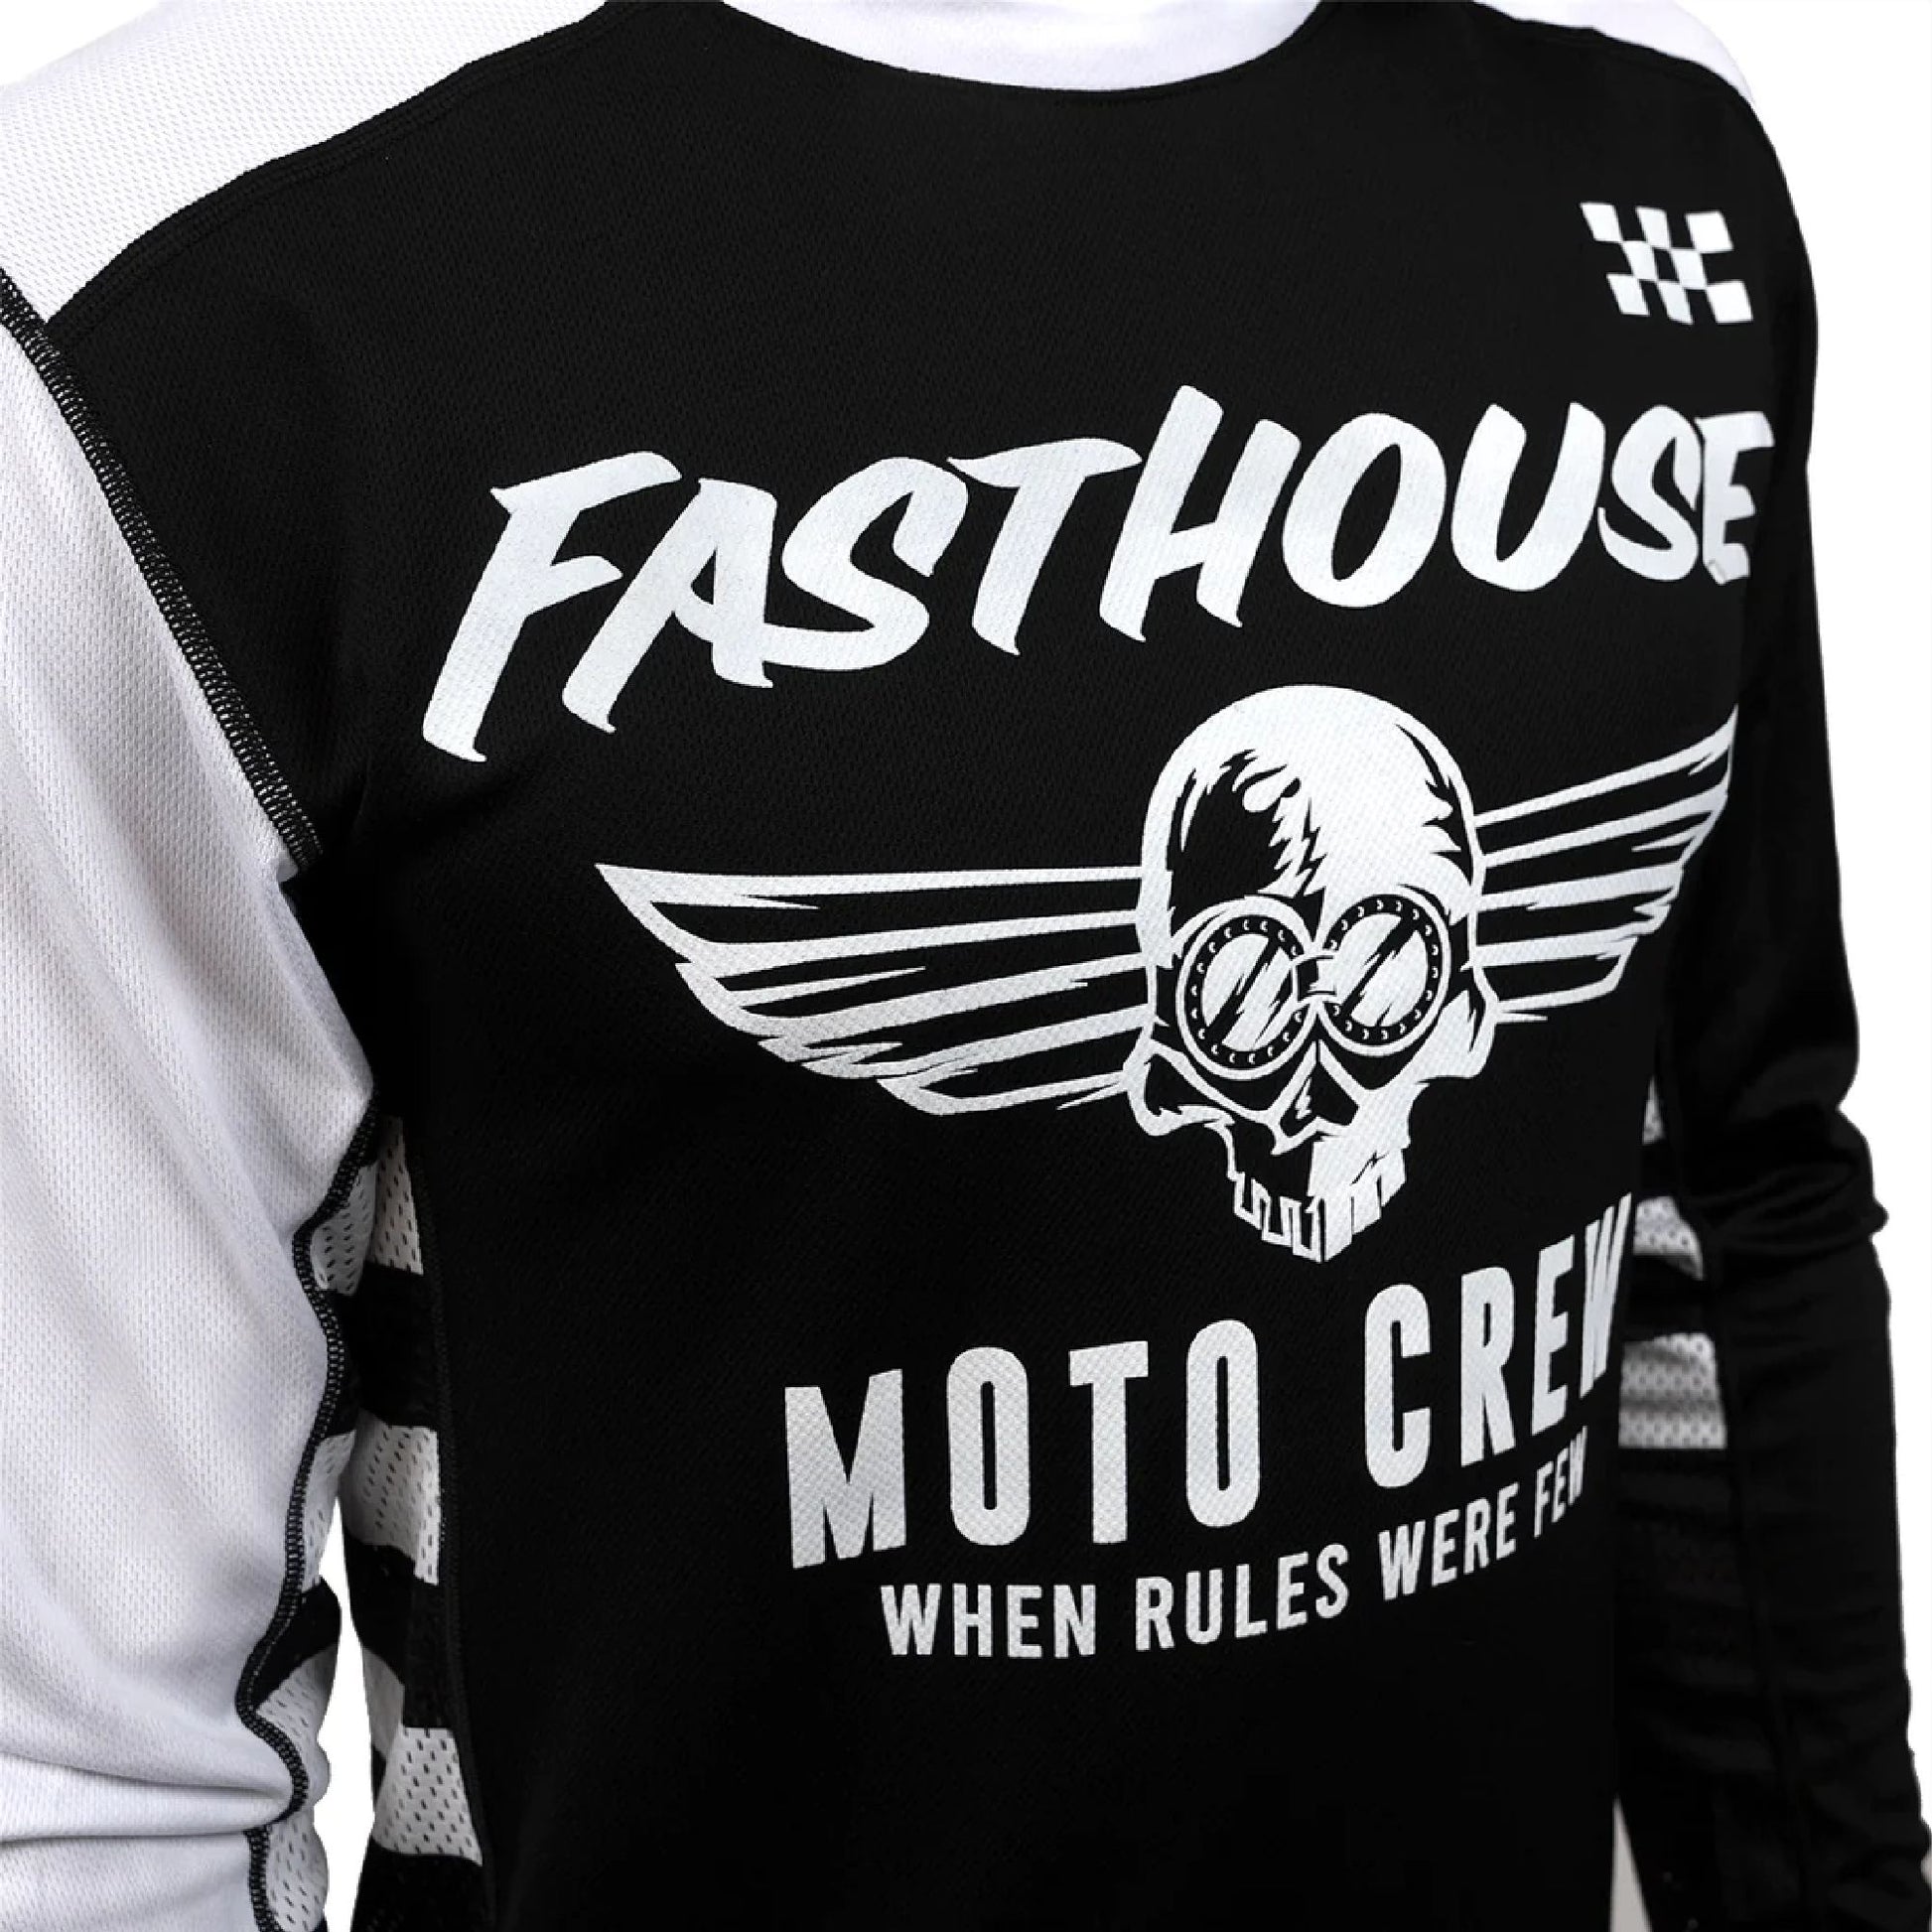 Fasthouse USA Grindhouse Factor Jersey Black White Bike Jerseys